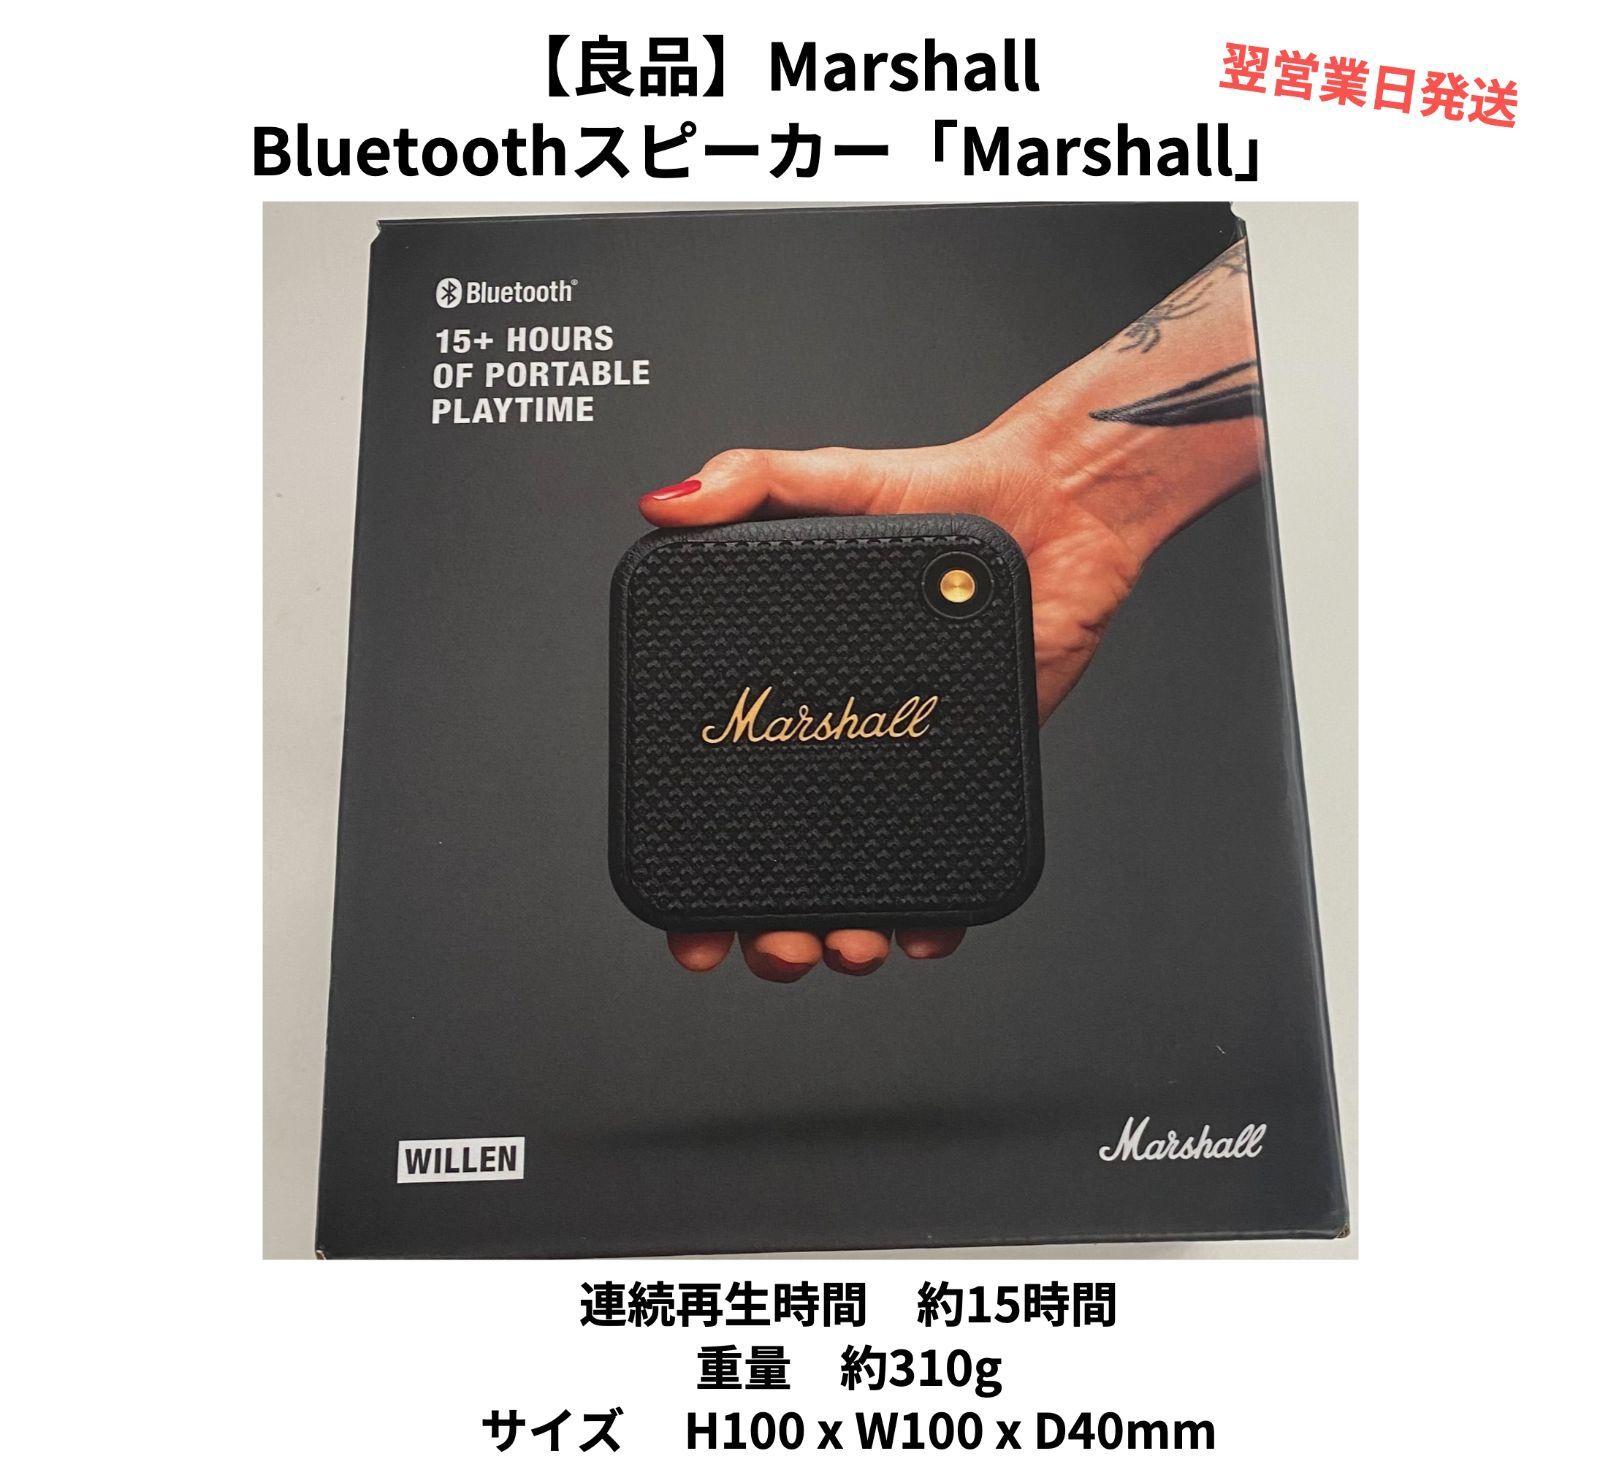 MA様専用】Bluetoothスピーカー Marshall 「WILLEN」 - メルカリ